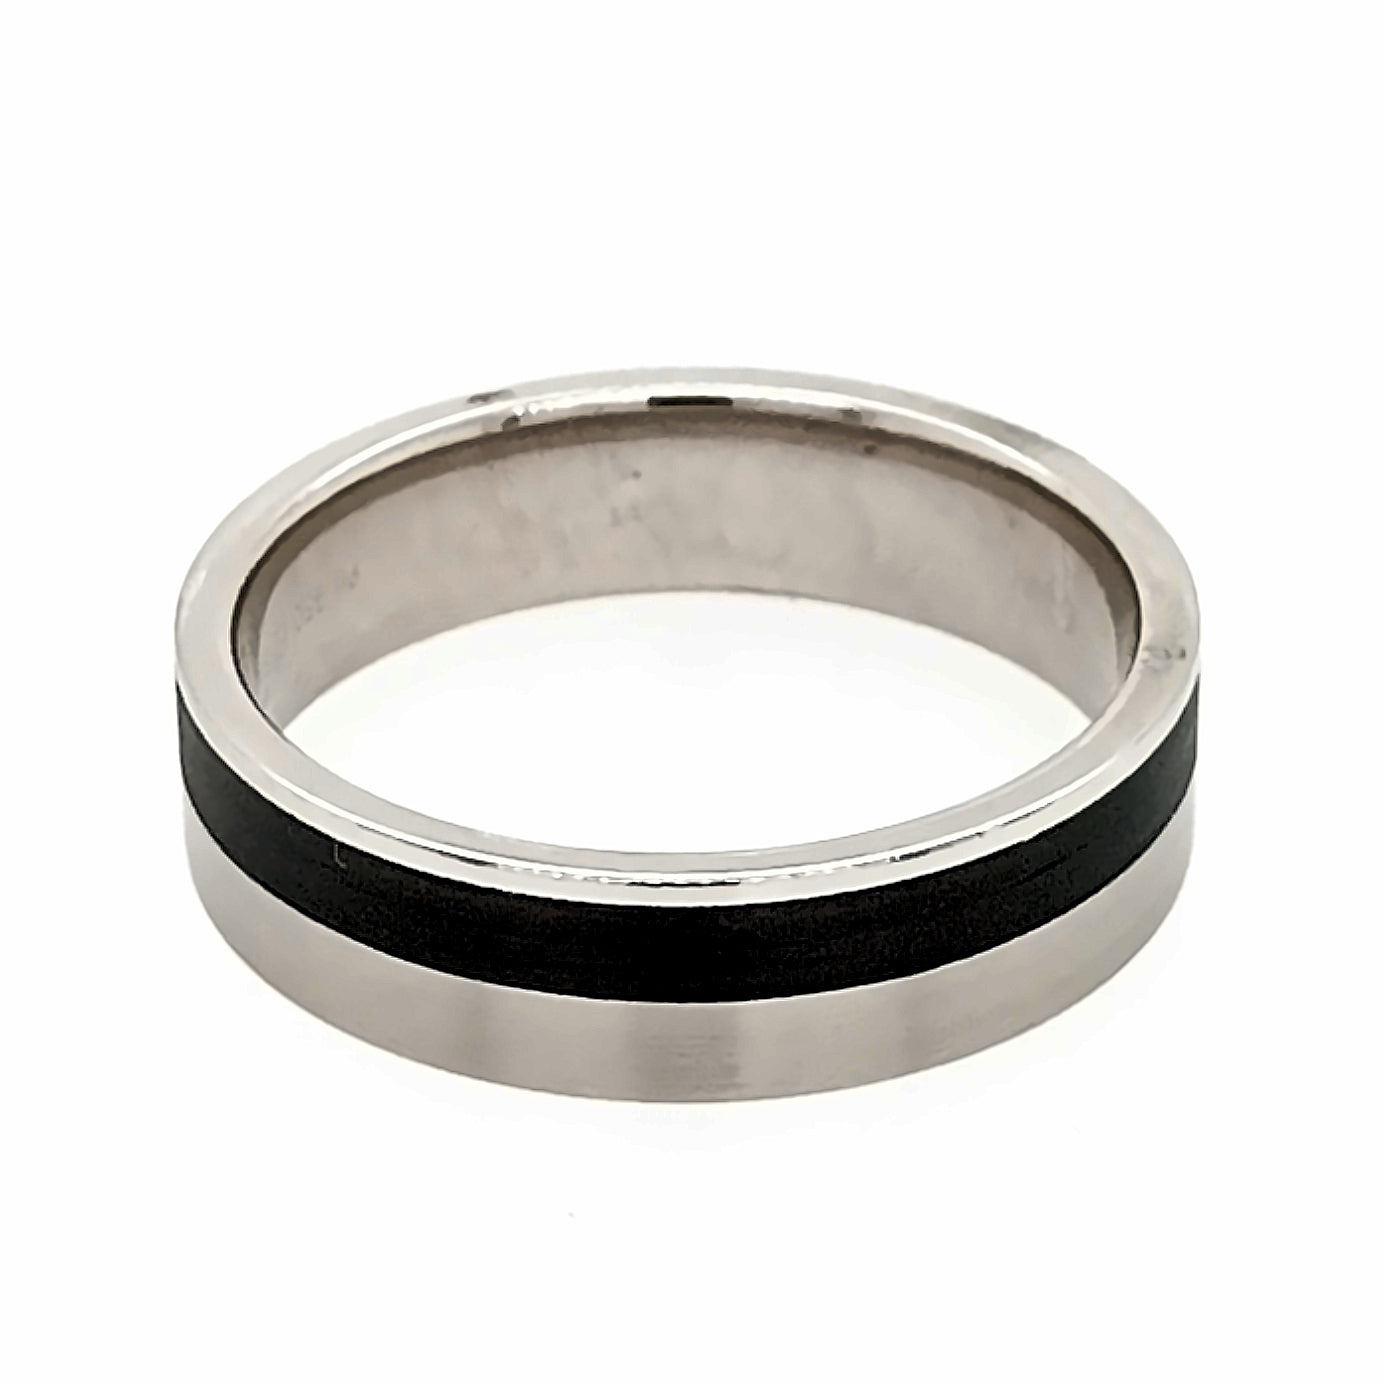 Mens Palladium and Carbon Fibre Wedding Ring